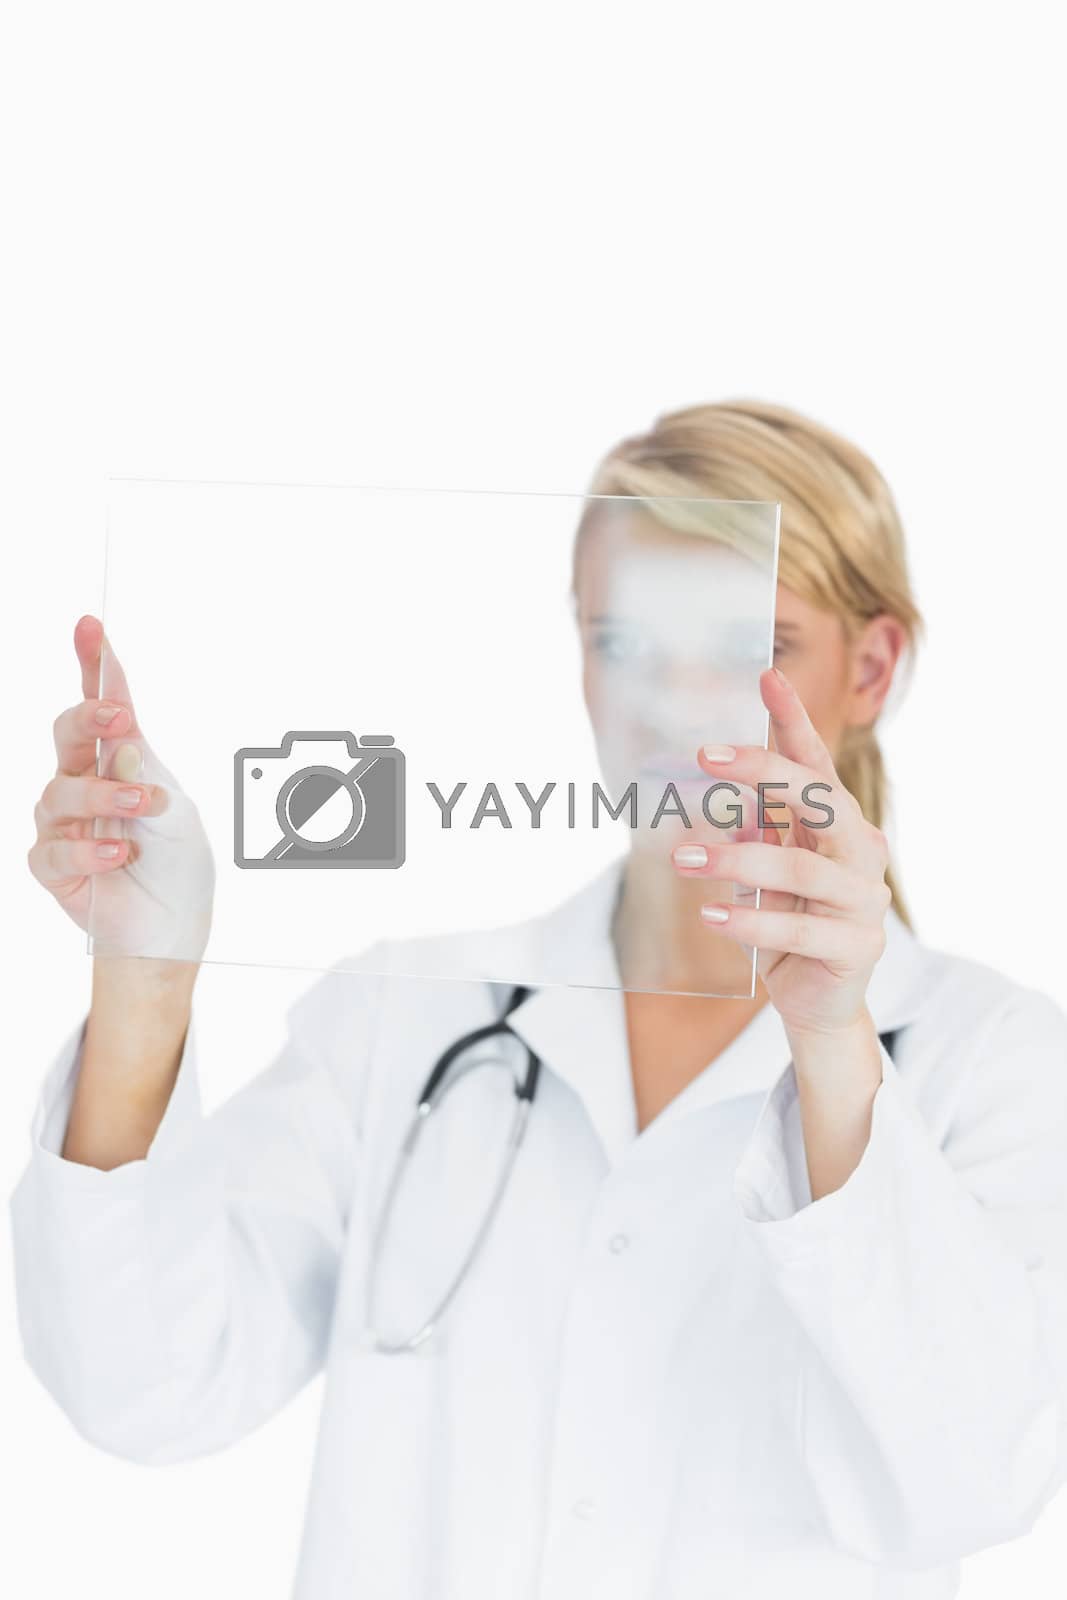 Royalty free image of Doctor studying large blank pane by Wavebreakmedia